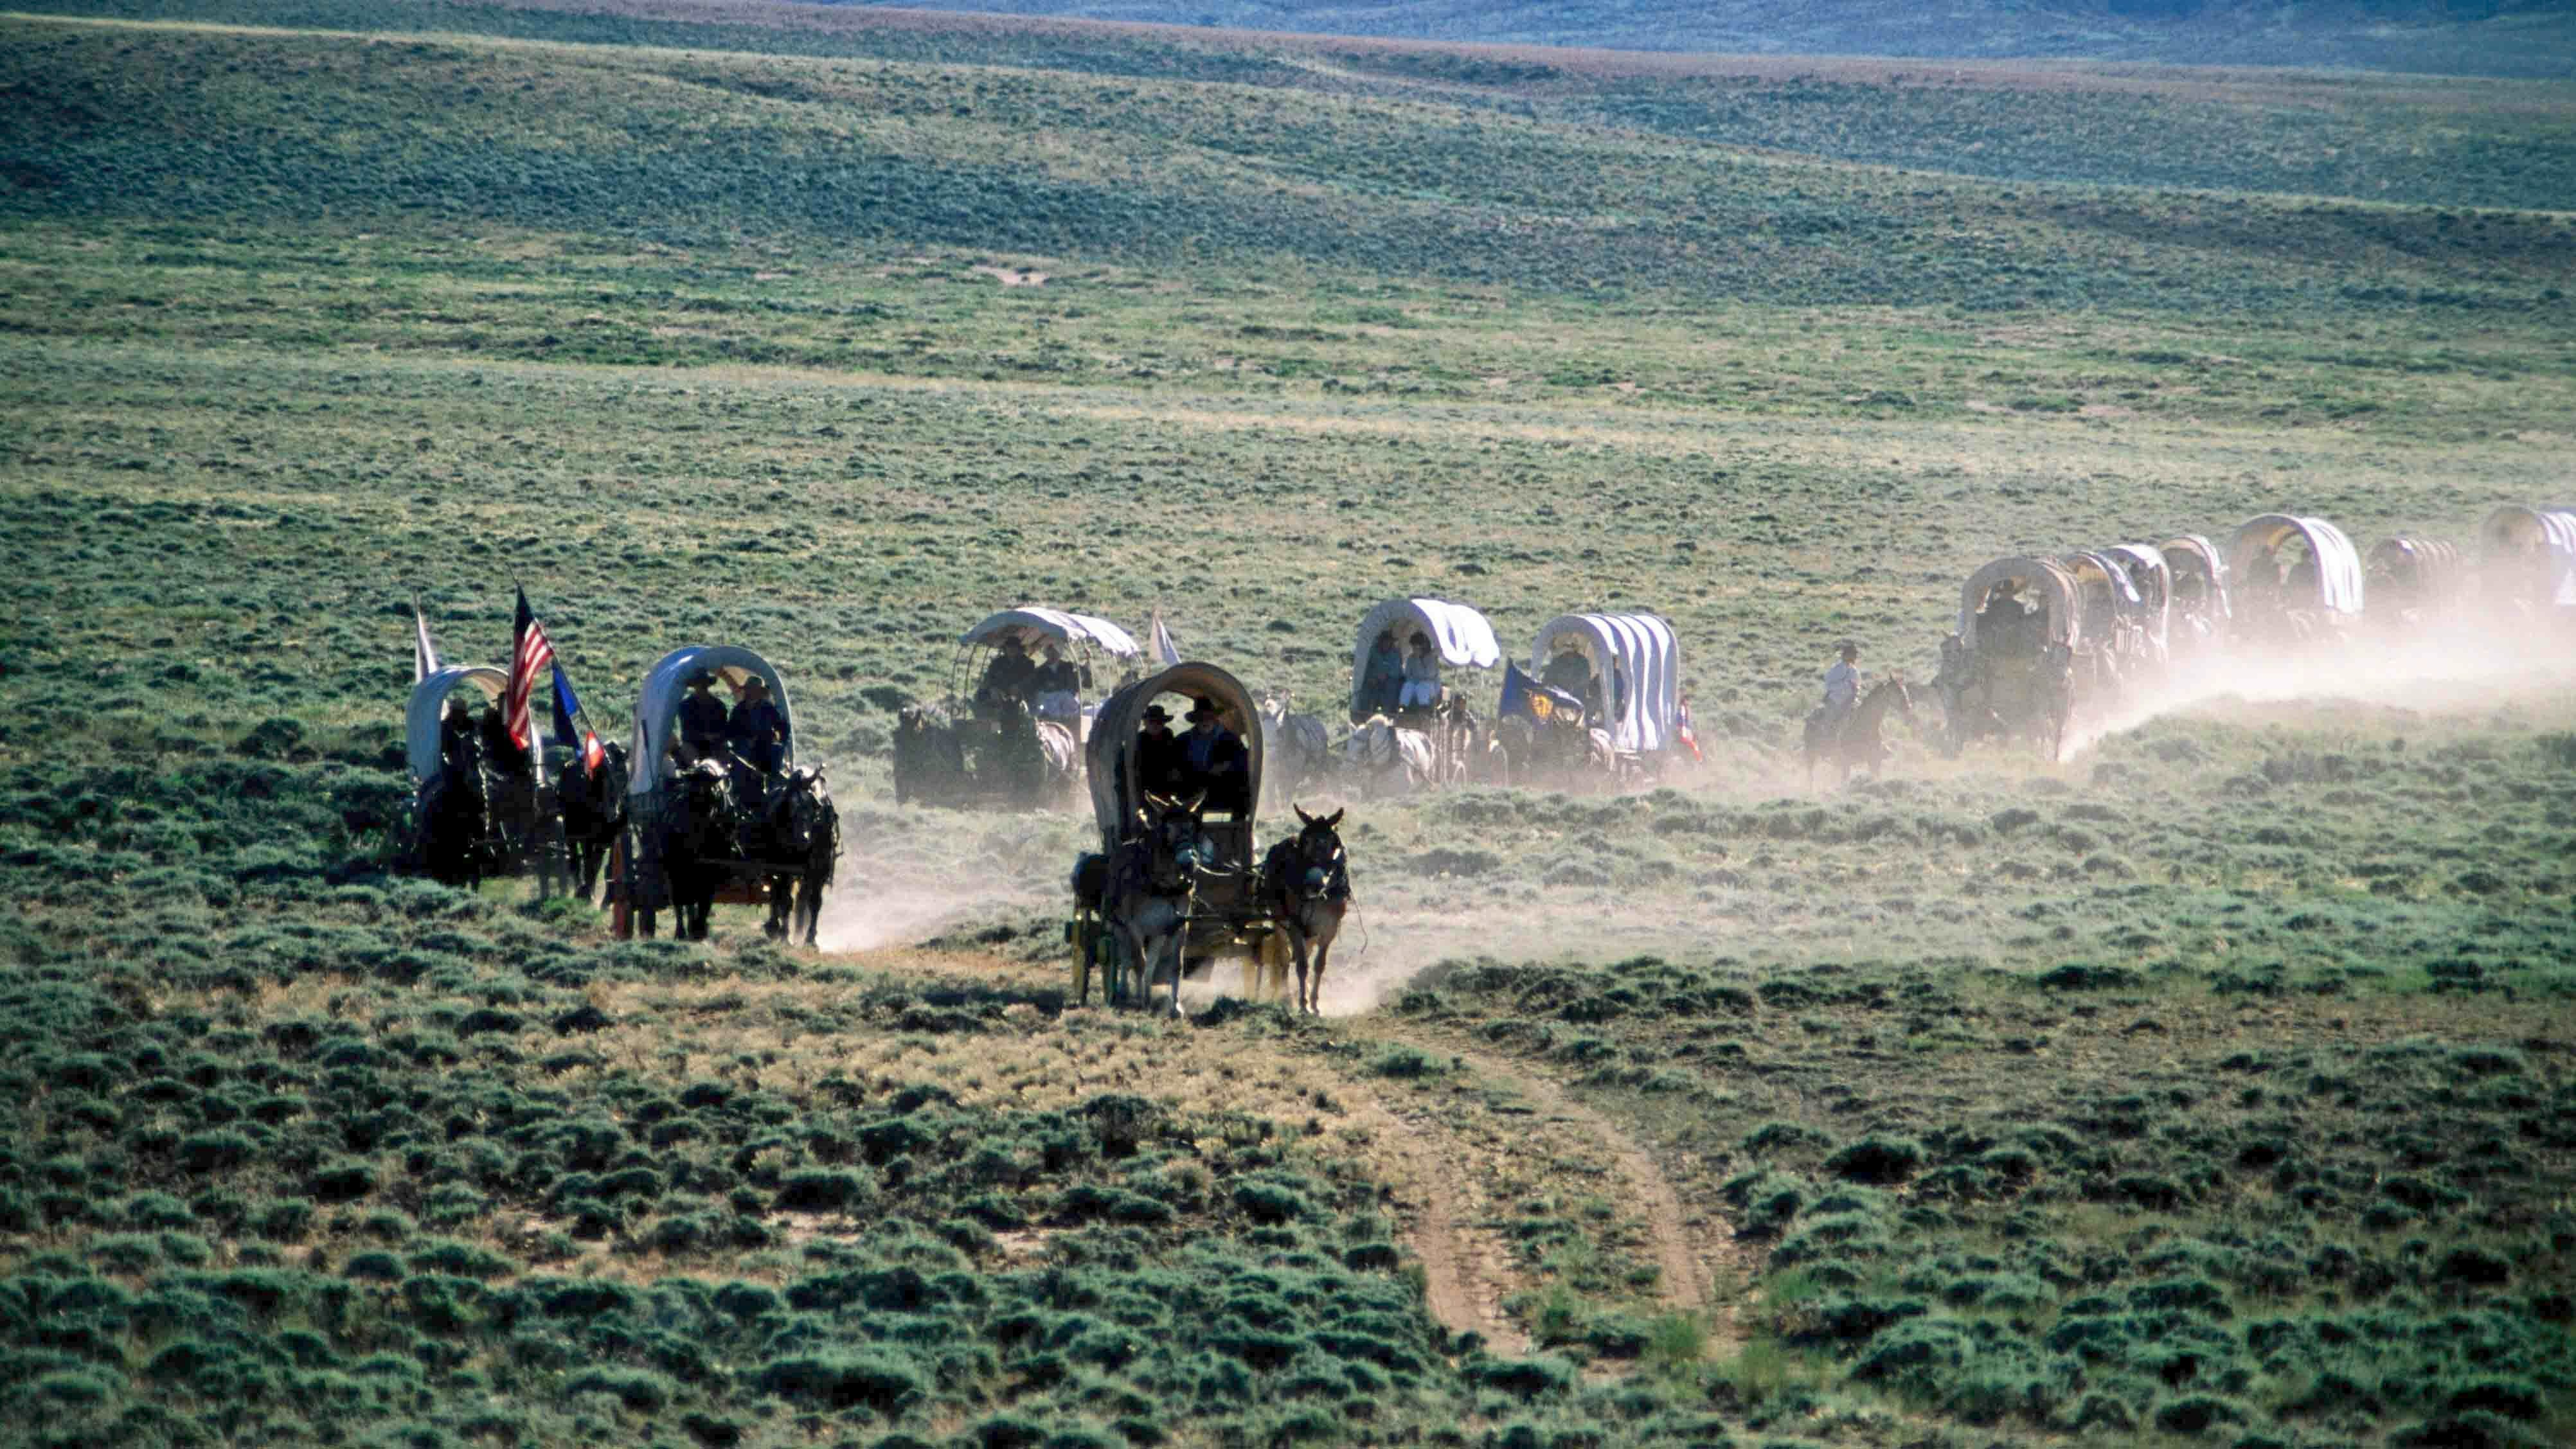 Dusty horse carriage trek, Mormon Pioneer Wagon Train to Utah, near South Pass, Wyoming